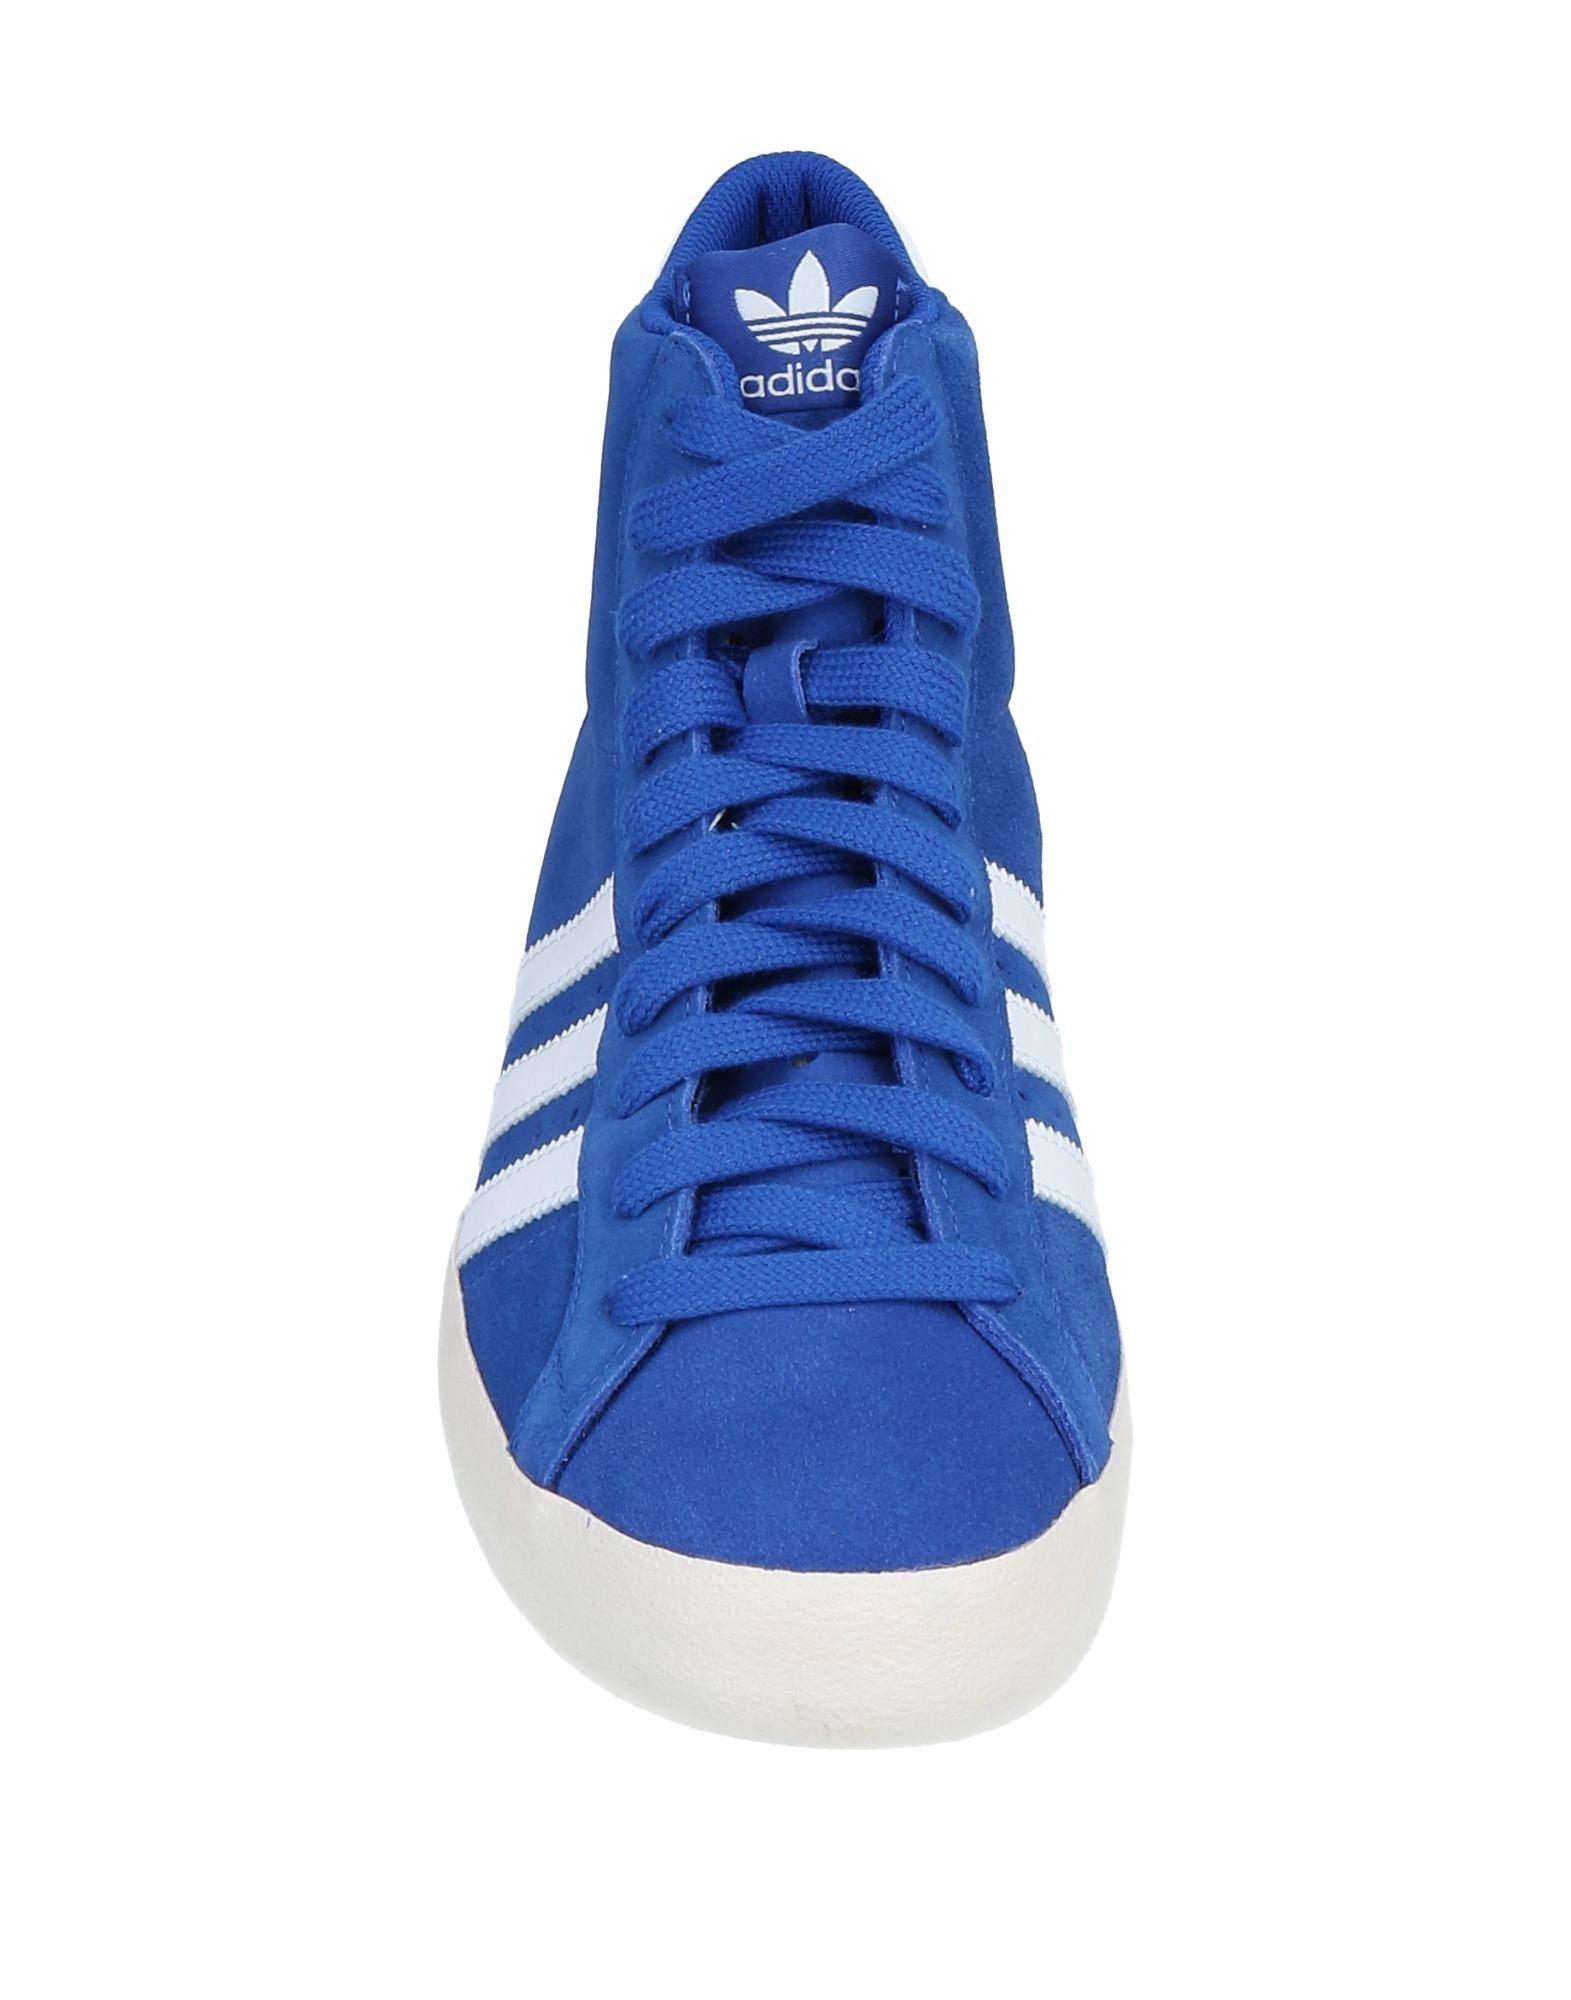 High Top Adidas Blue | vlr.eng.br